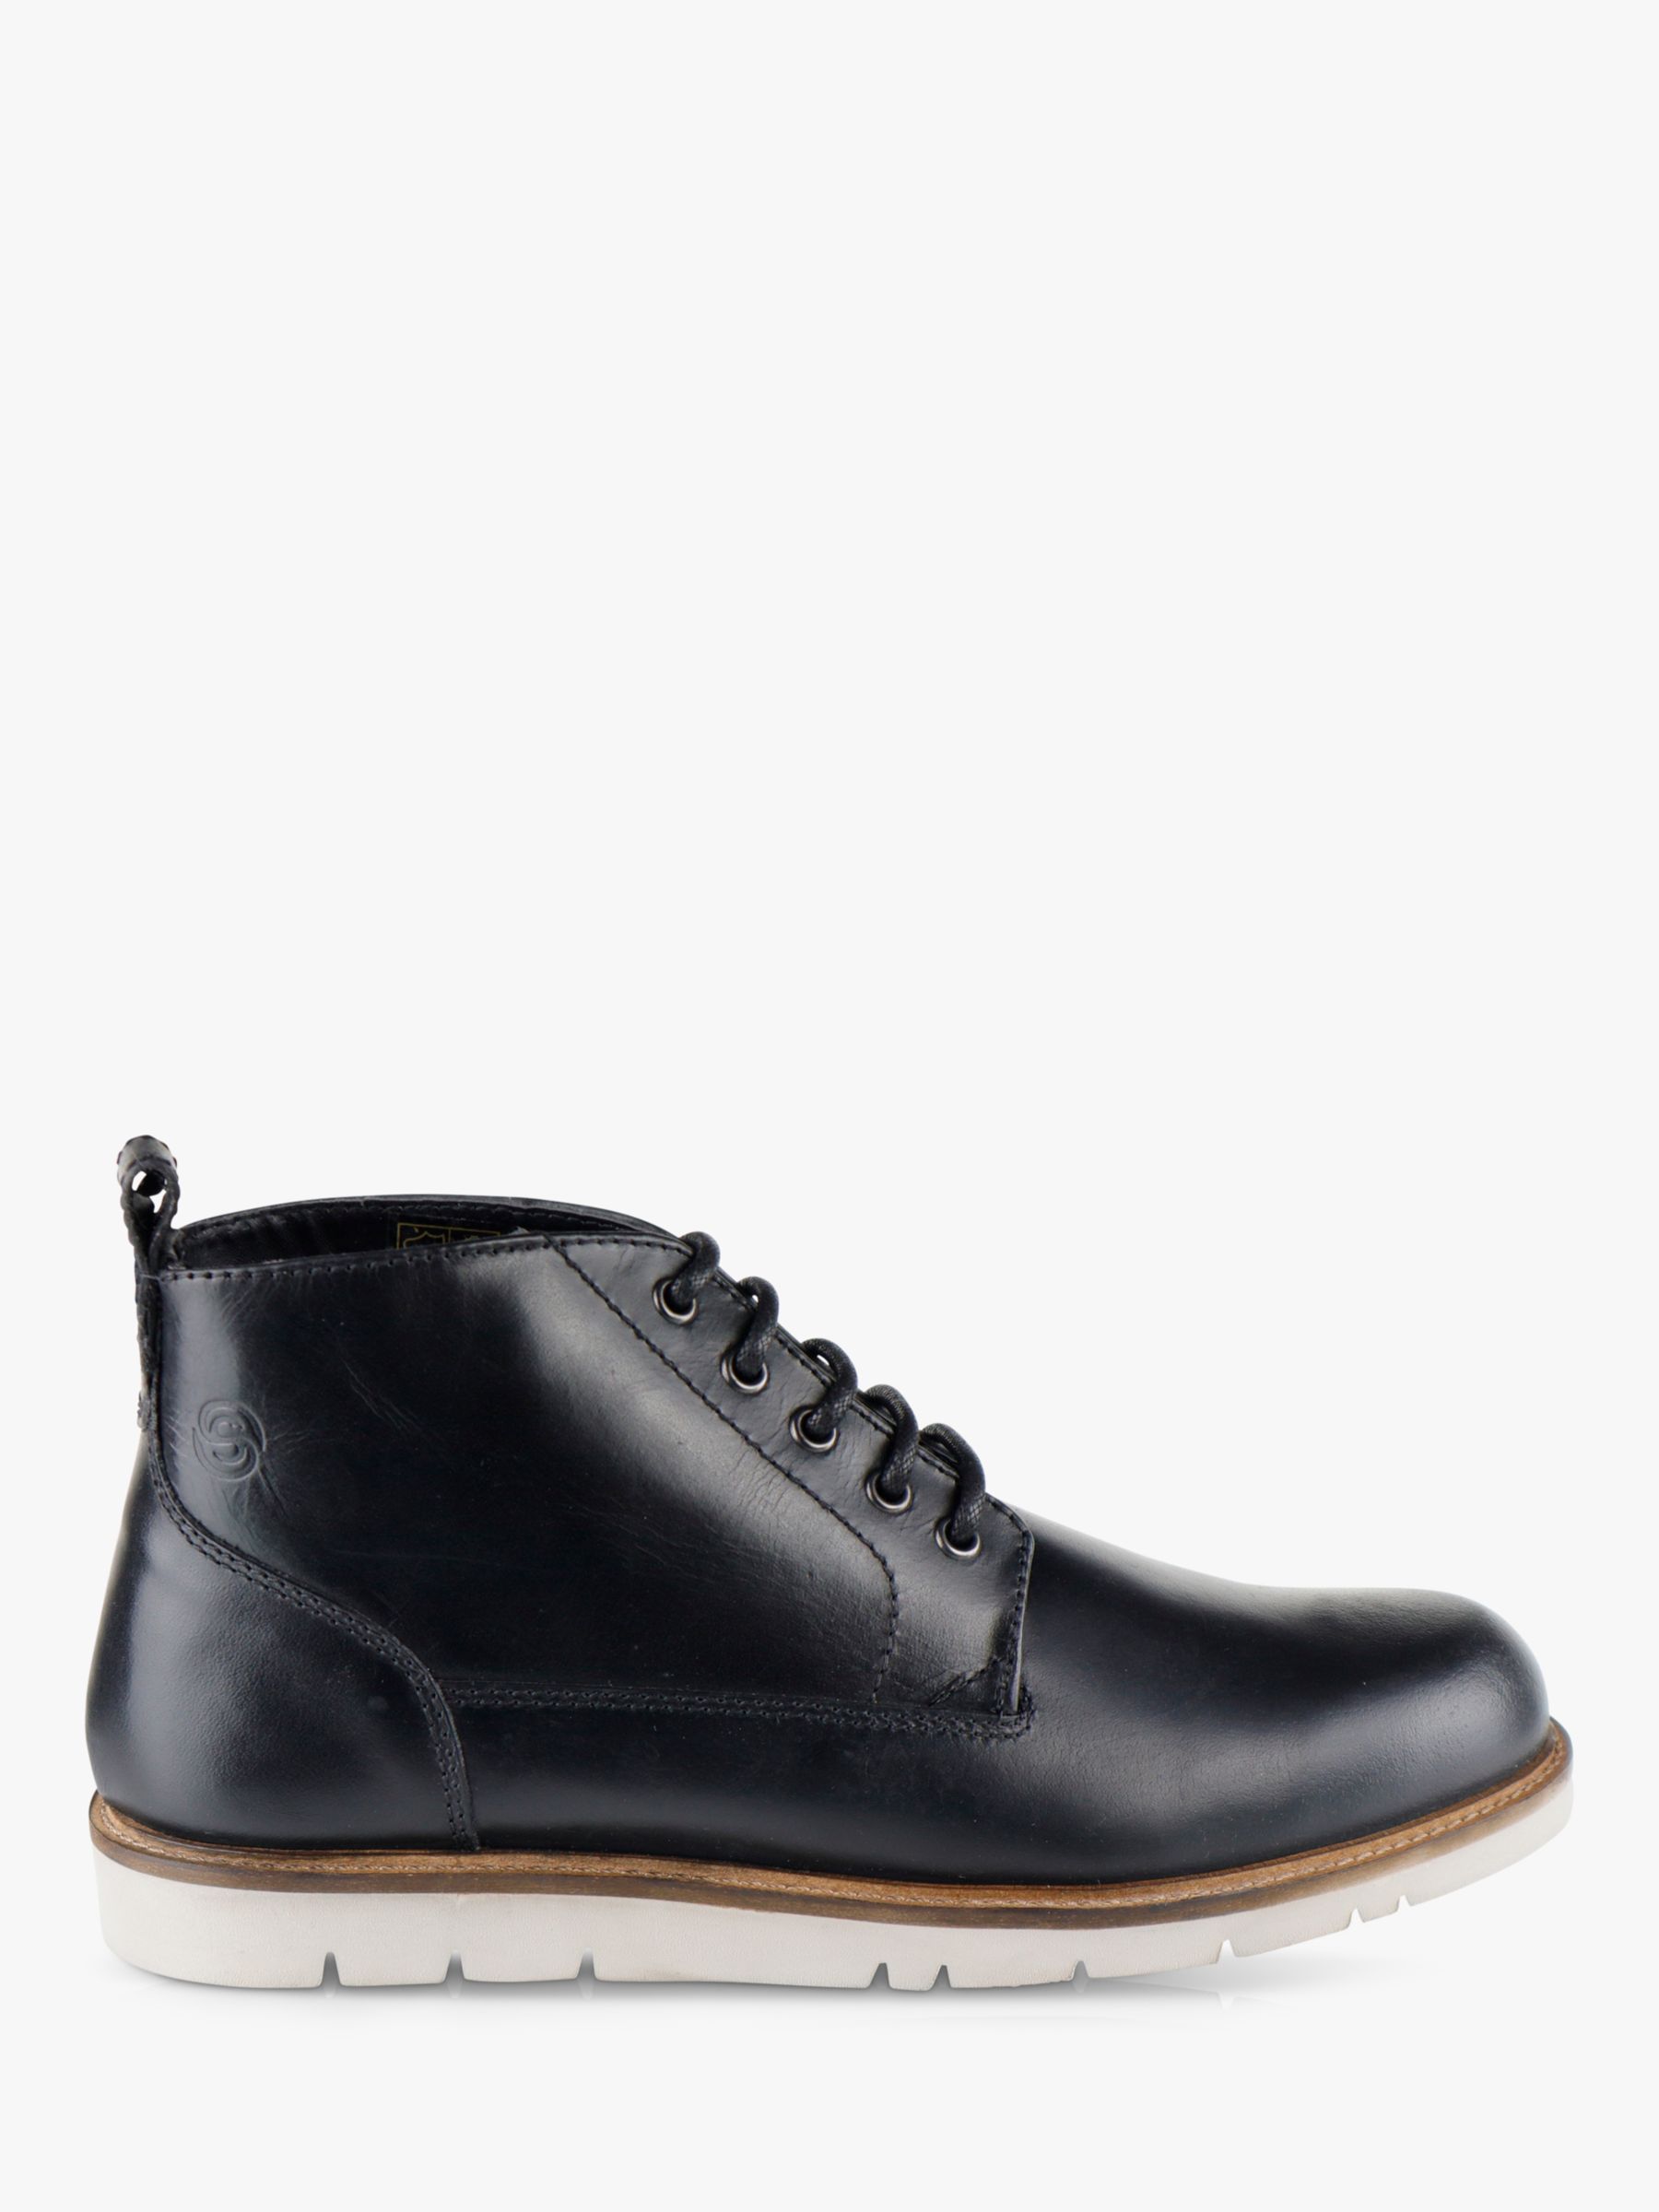 Silver Street London Alderman Lace Up Leather Chukka Boots, Black, 7